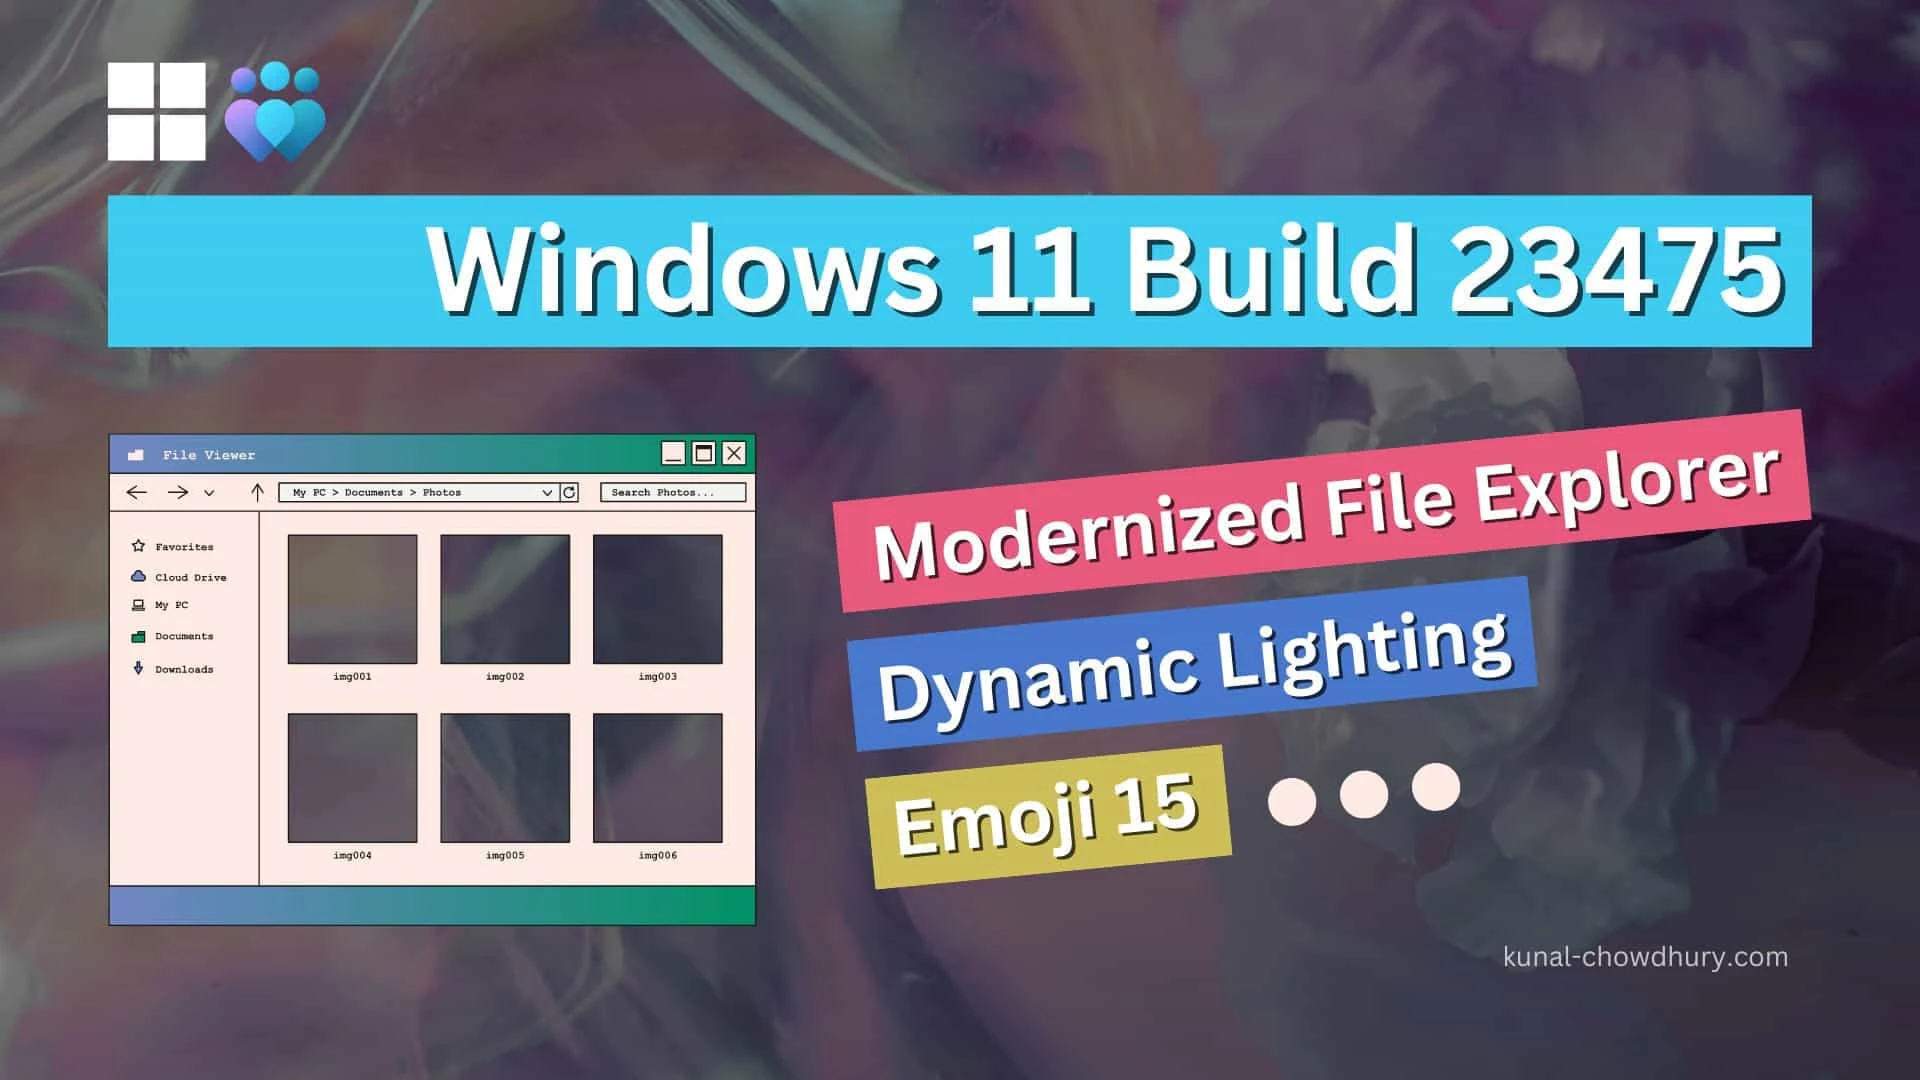 Windows 11 Insider Preview Build 23475 Unveils Modernized File Explorer and Dynamic Lighting